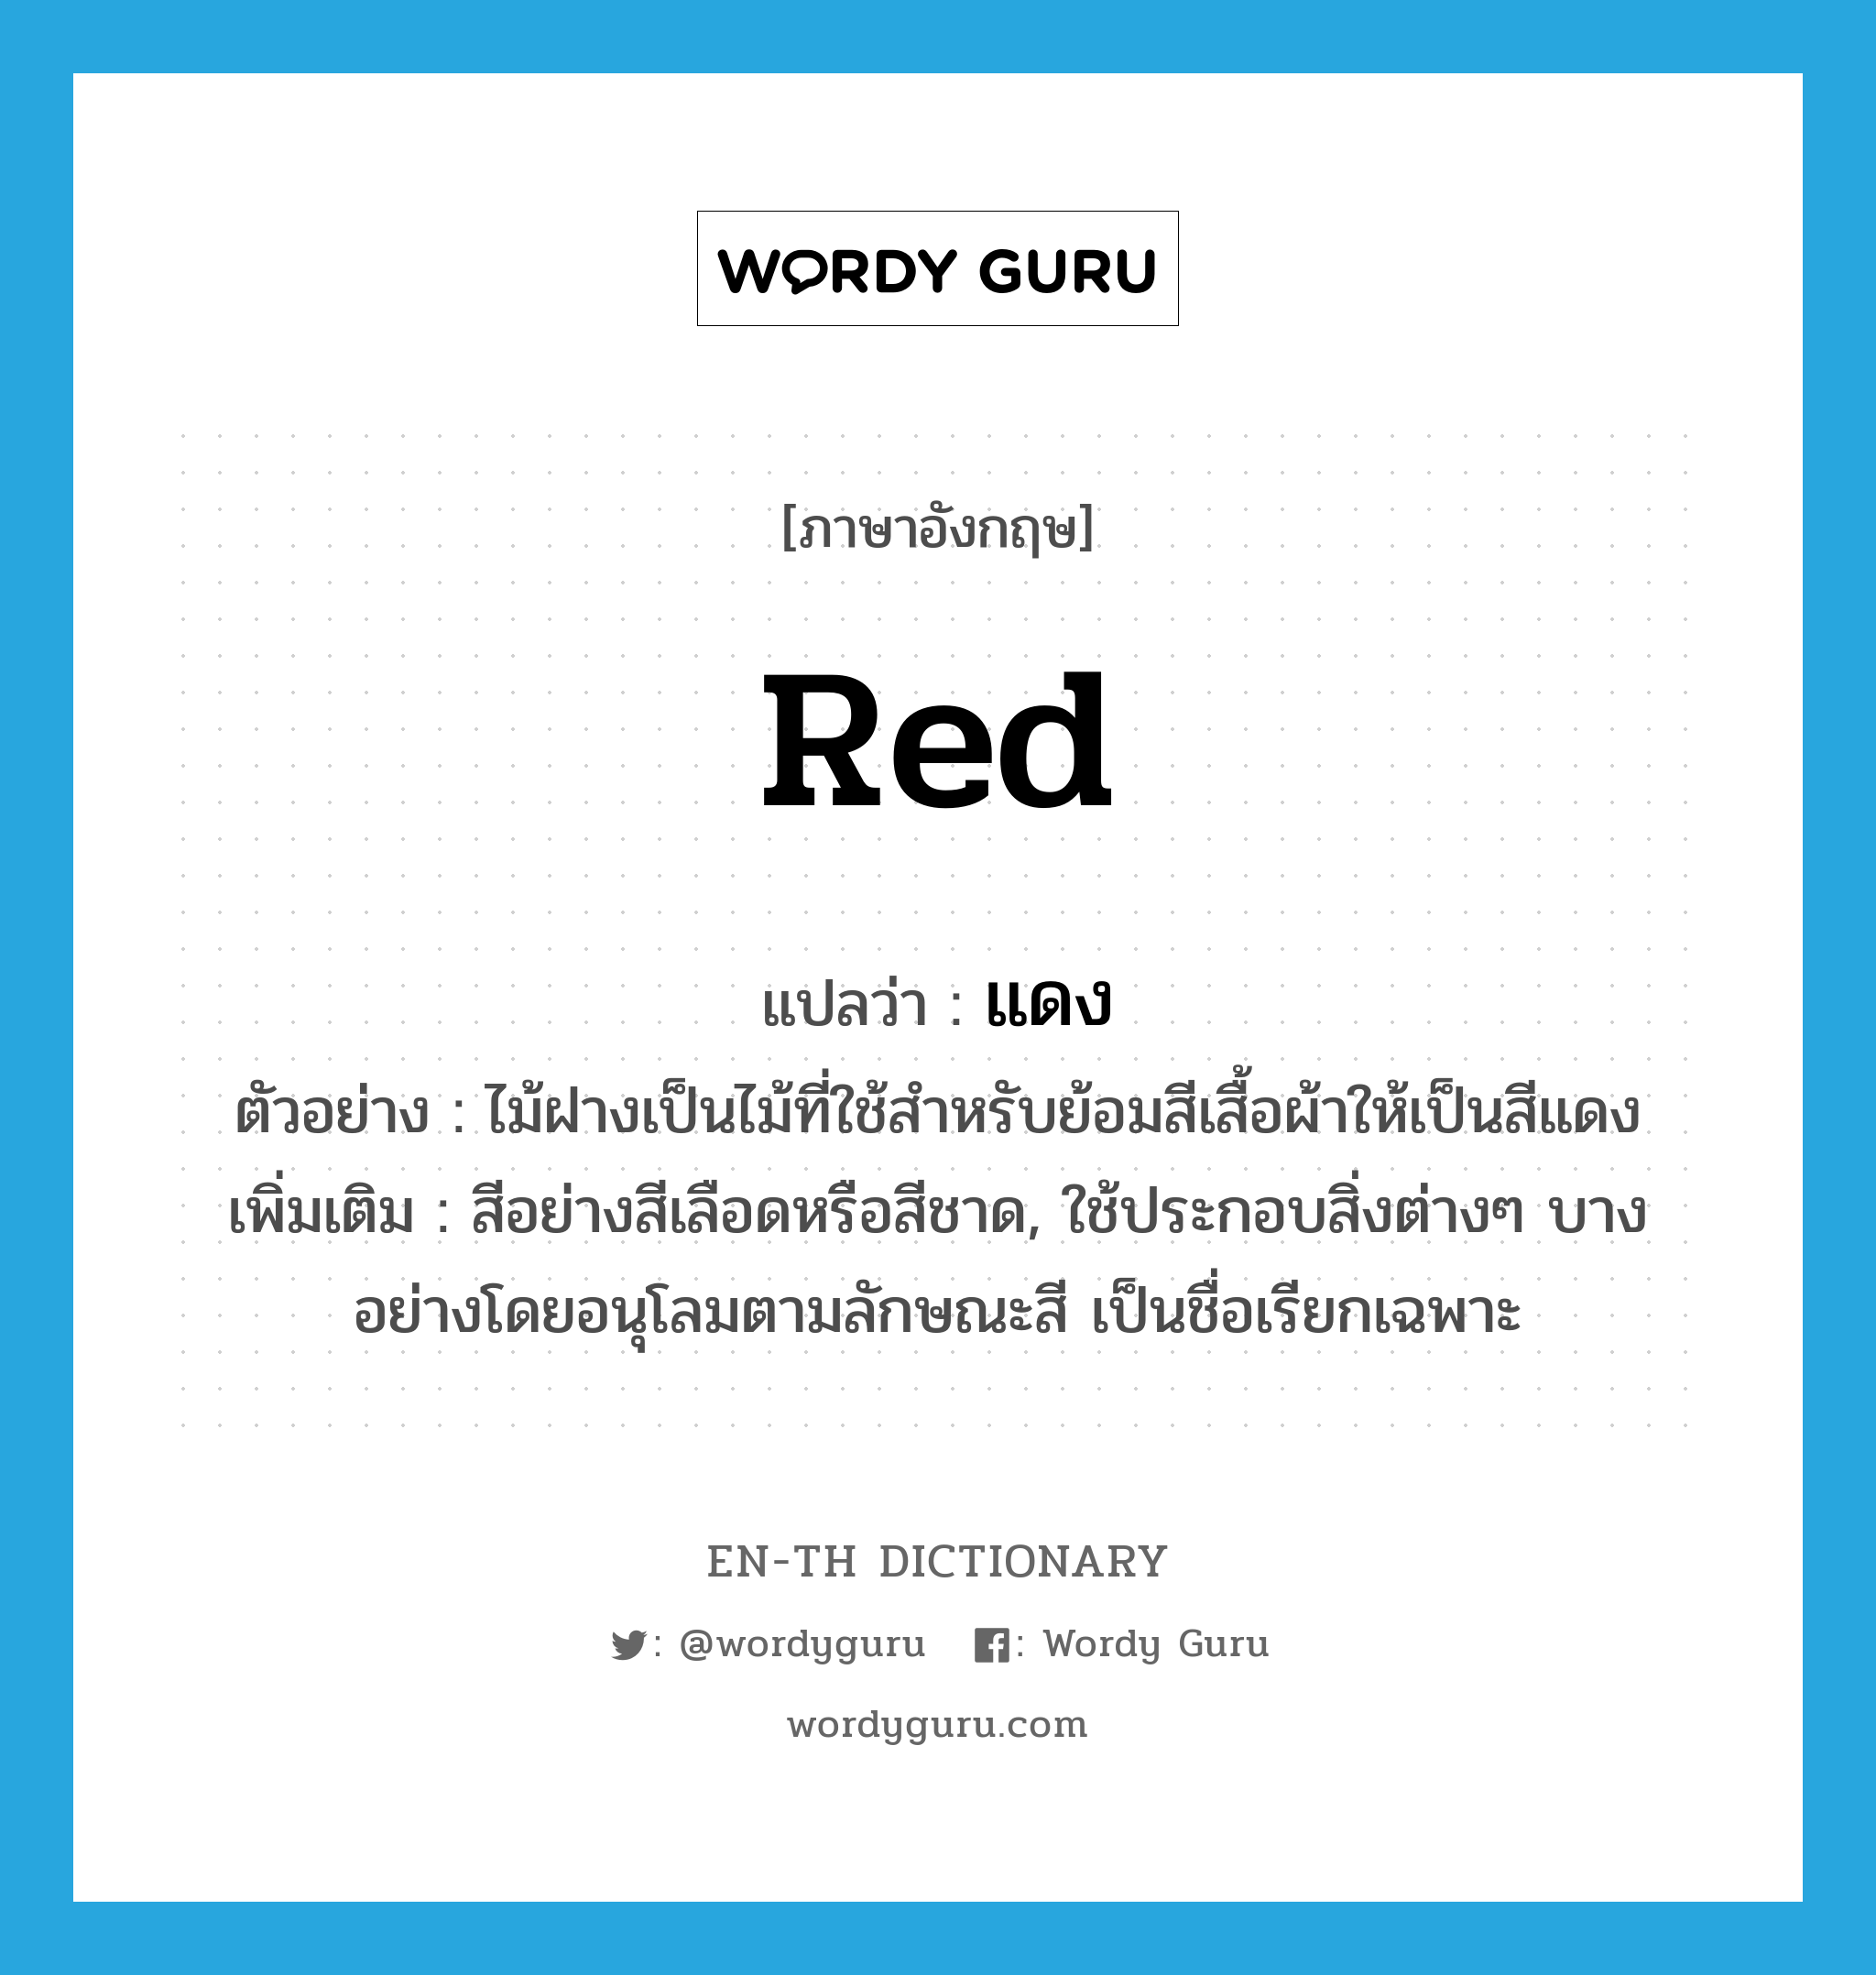 red แปลว่า?, คำศัพท์ภาษาอังกฤษ red แปลว่า แดง ประเภท N ตัวอย่าง ไม้ฝางเป็นไม้ที่ใช้สำหรับย้อมสีเสื้อผ้าให้เป็นสีแดง เพิ่มเติม สีอย่างสีเลือดหรือสีชาด, ใช้ประกอบสิ่งต่างๆ บางอย่างโดยอนุโลมตามลักษณะสี เป็นชื่อเรียกเฉพาะ หมวด N